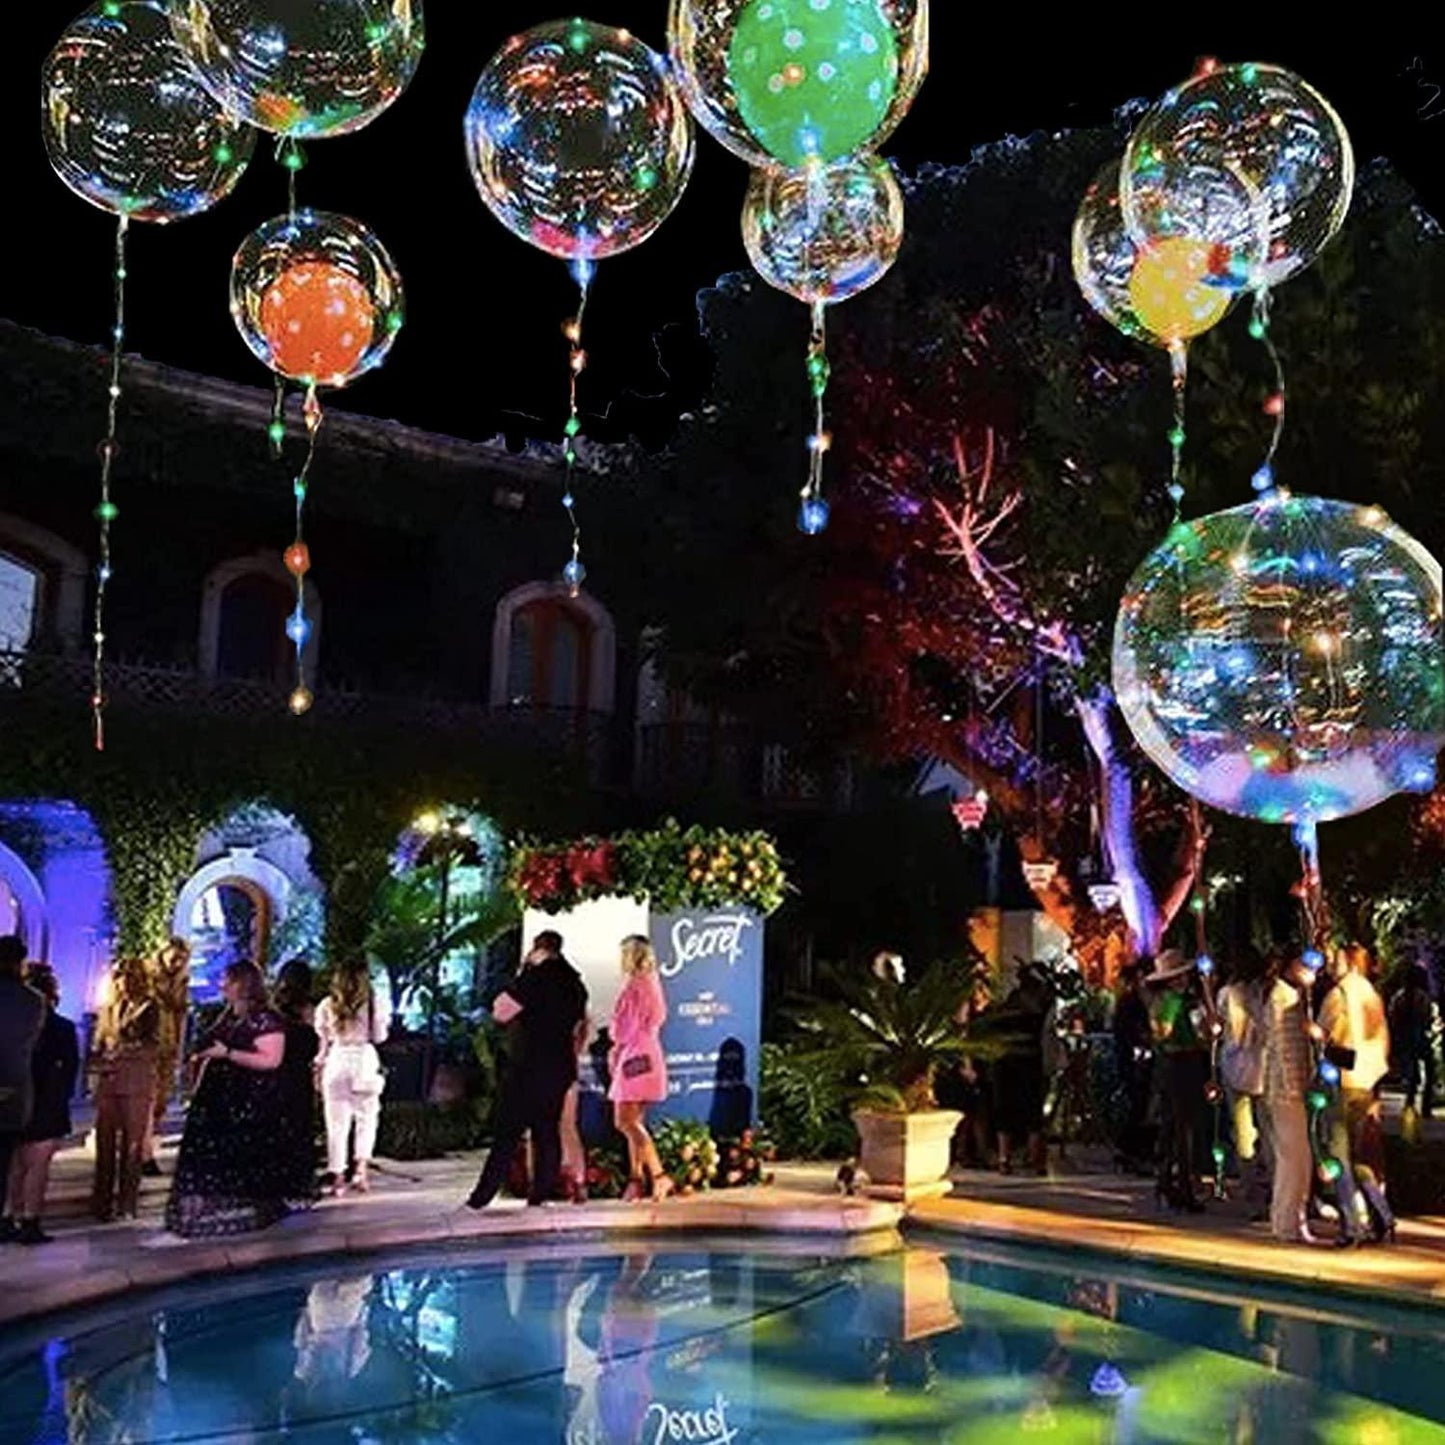 Reusable Led Bobo Balloons for Wedding and Sweet 16 Celebrations - If you say i do